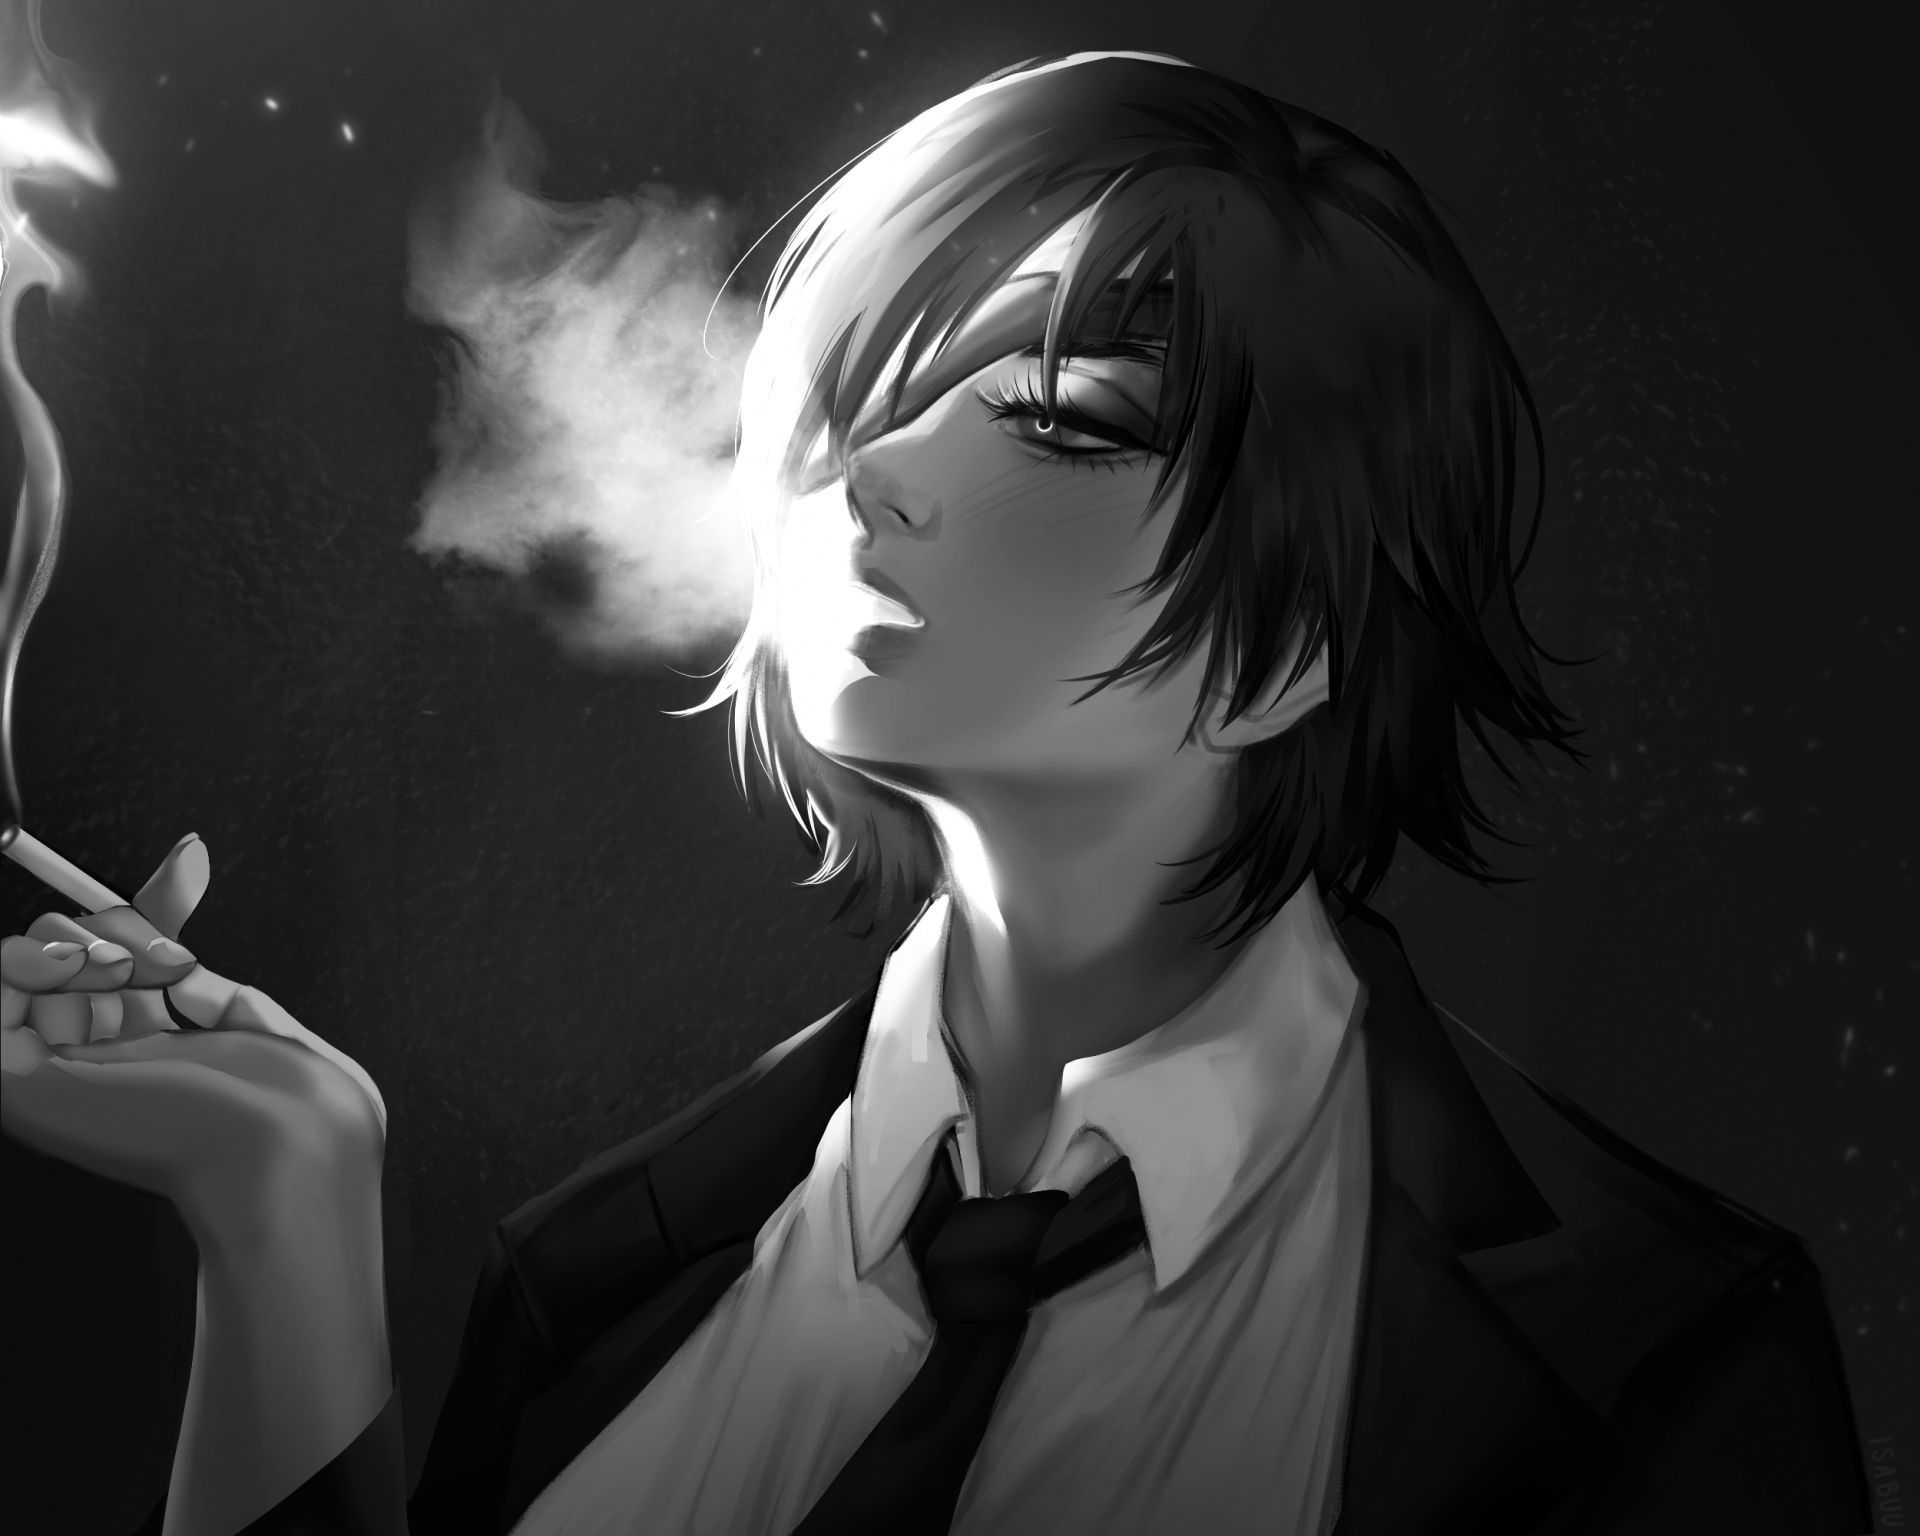 Anime guy around smoke by InfamySoulz on DeviantArt